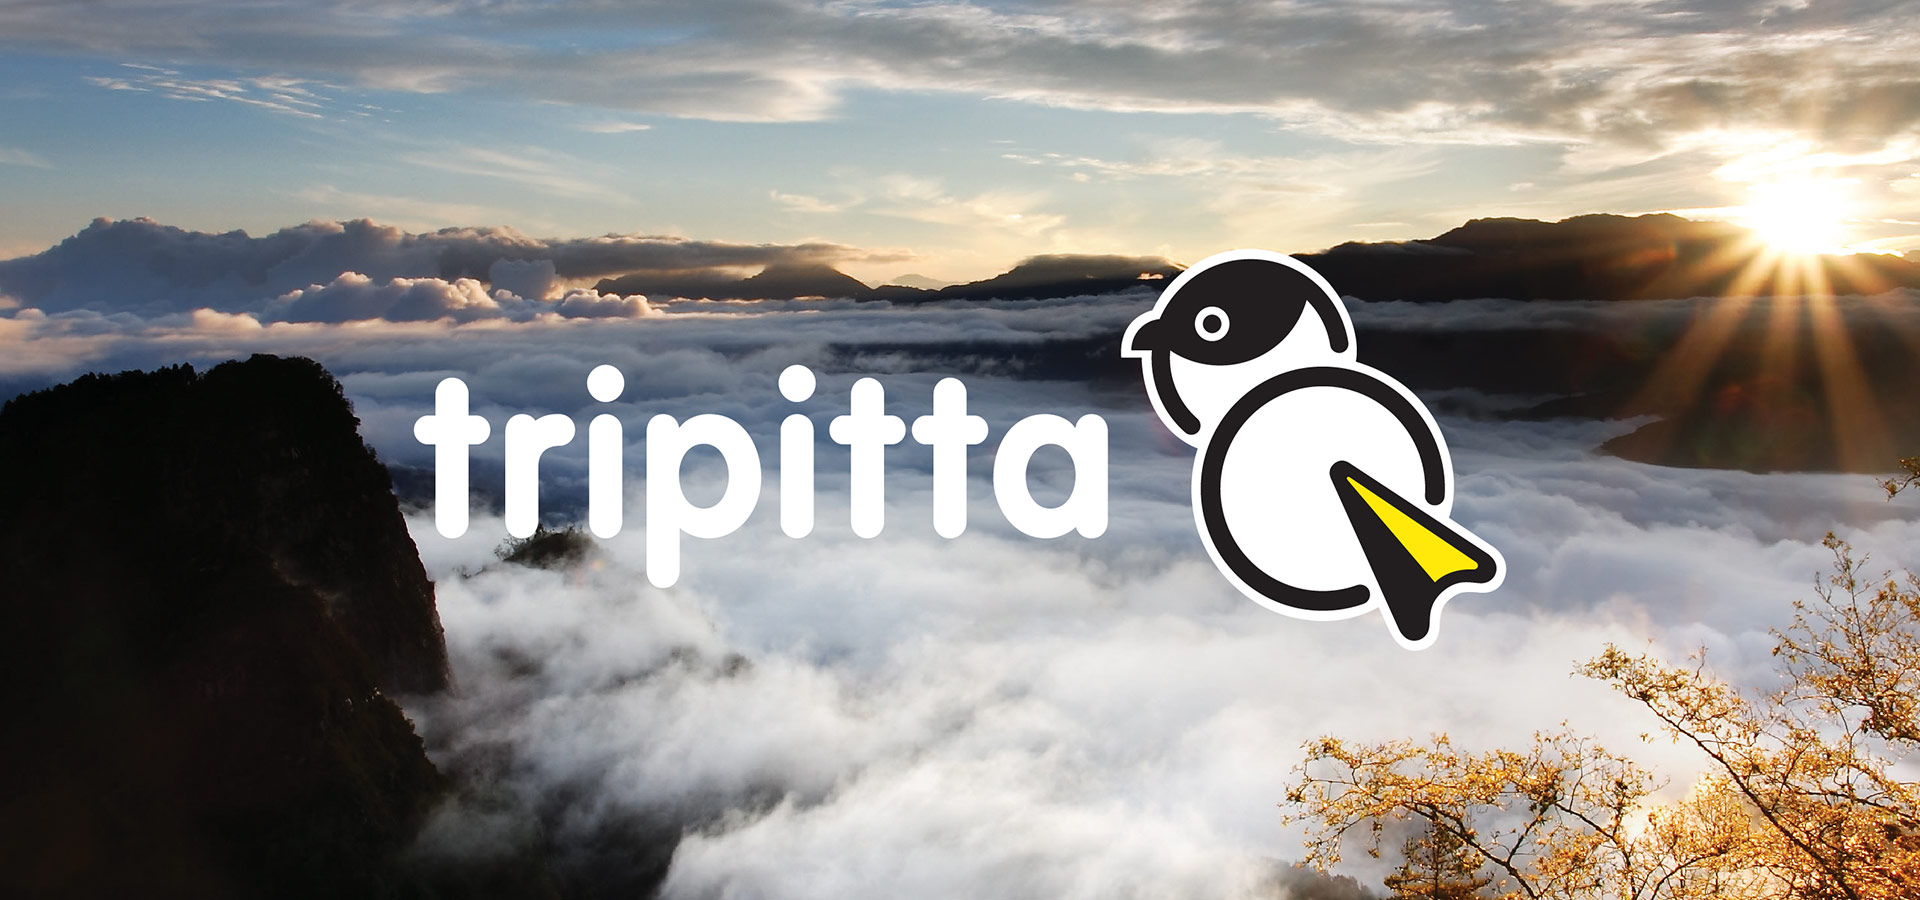 Tripitta 案例小圖 | 富爾特科技Tripitta旅必達品牌建構專案 | Labsology 法博思品牌顧問公司